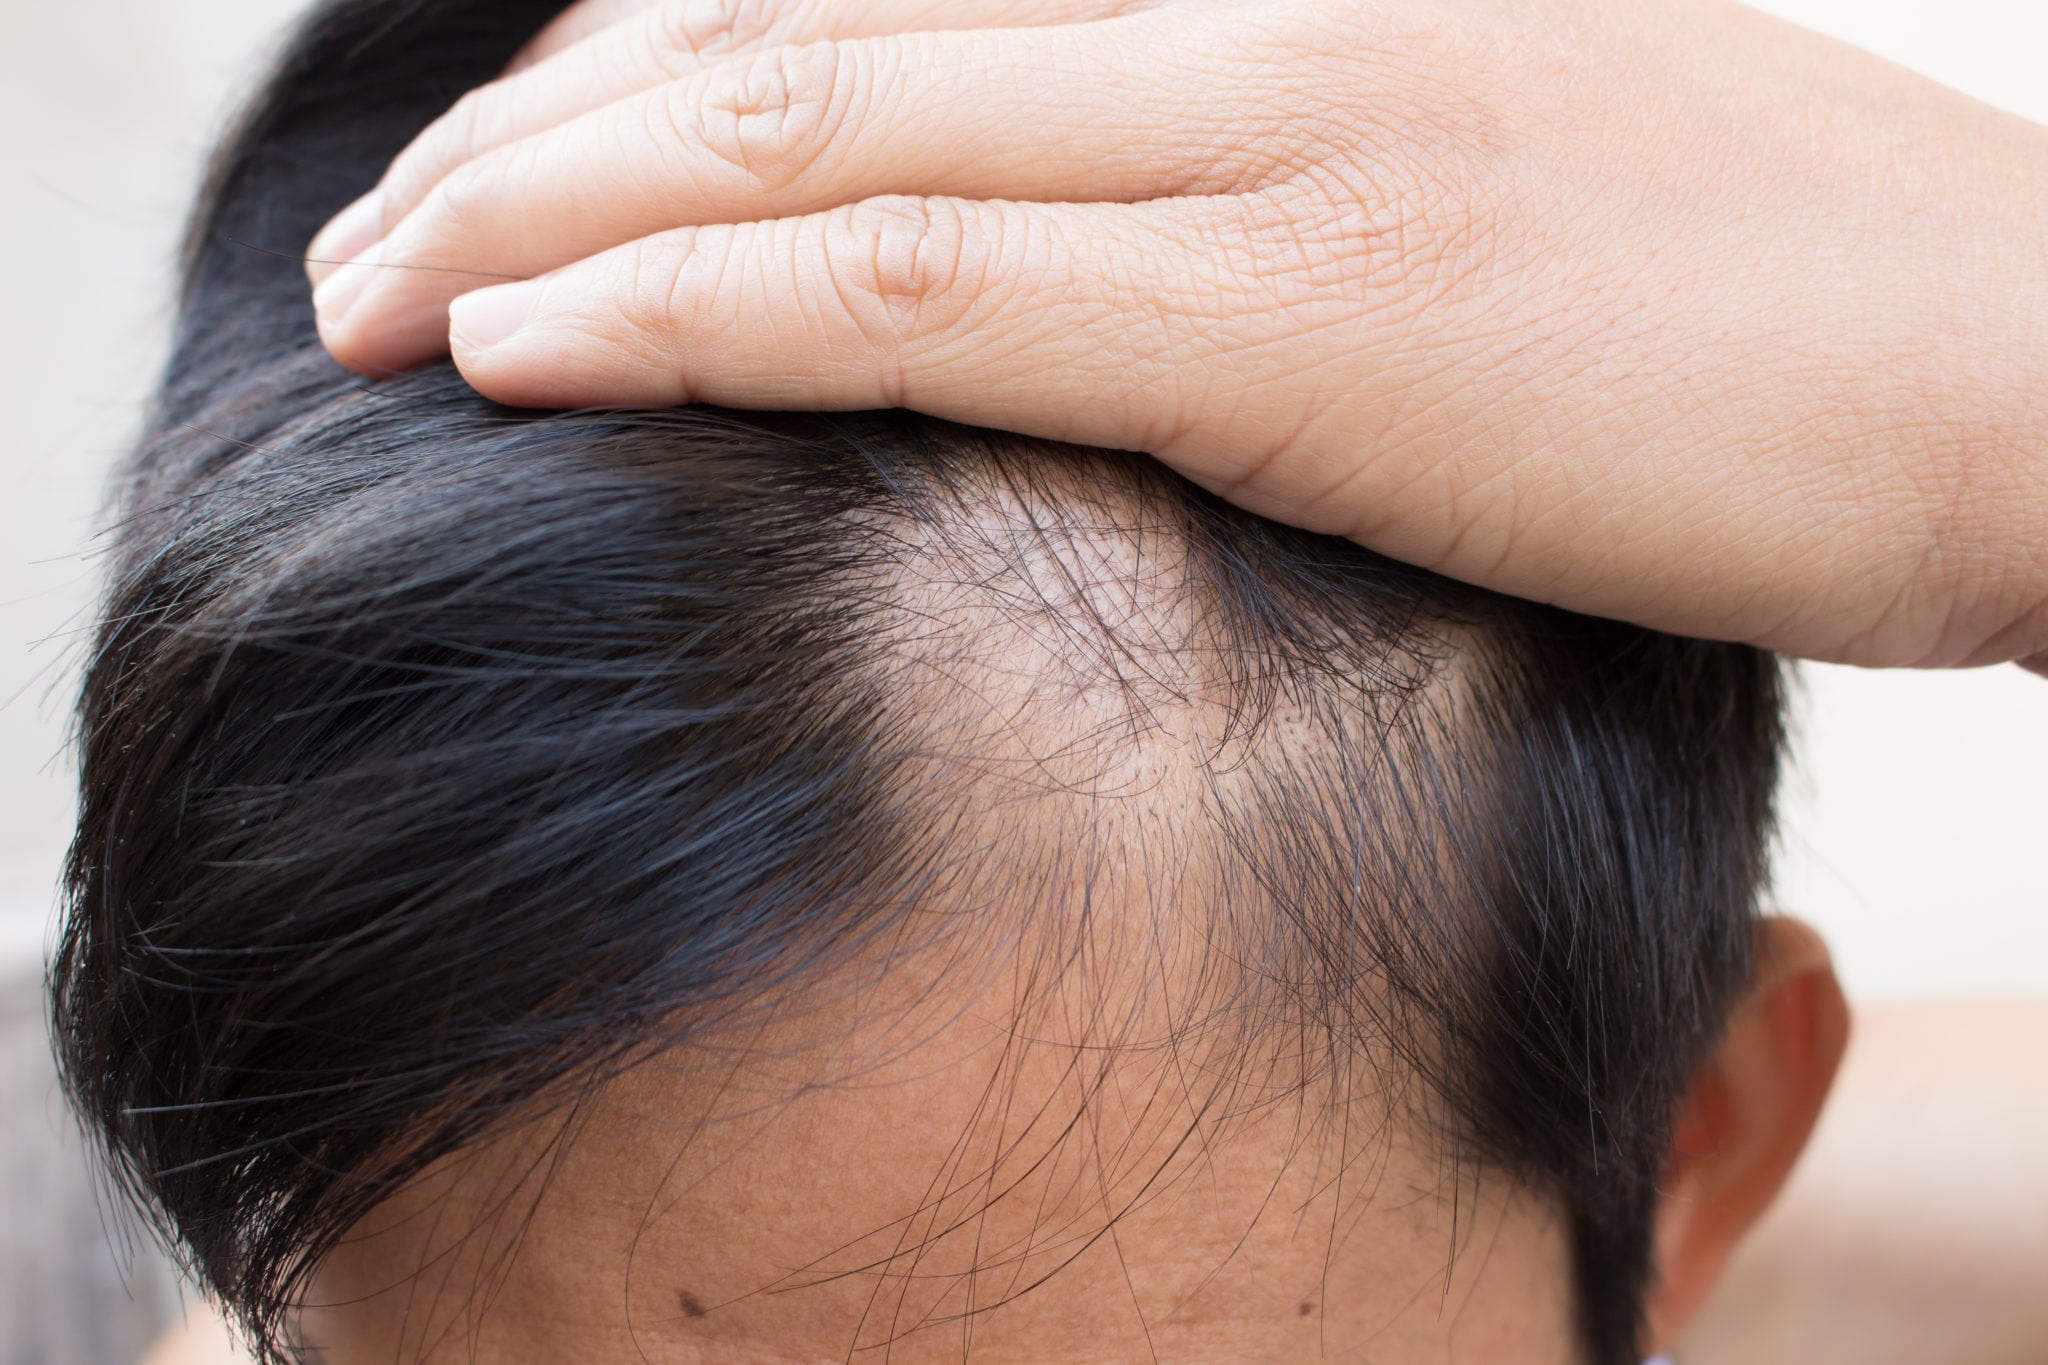 Types Of Alopecia Areata Alopecia Areata Hair Loss Treatment Srs